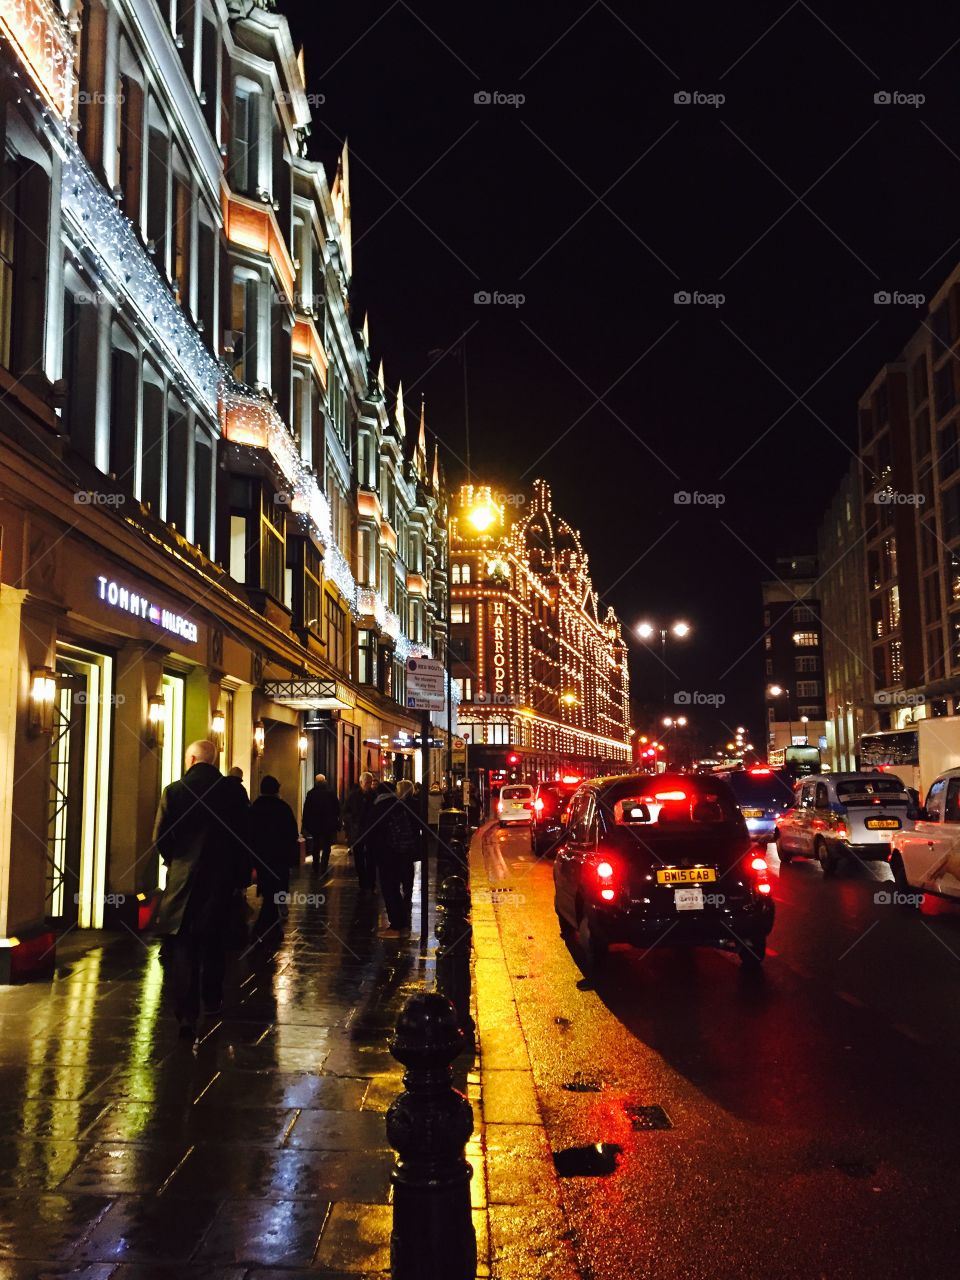 London street at Christmas time 